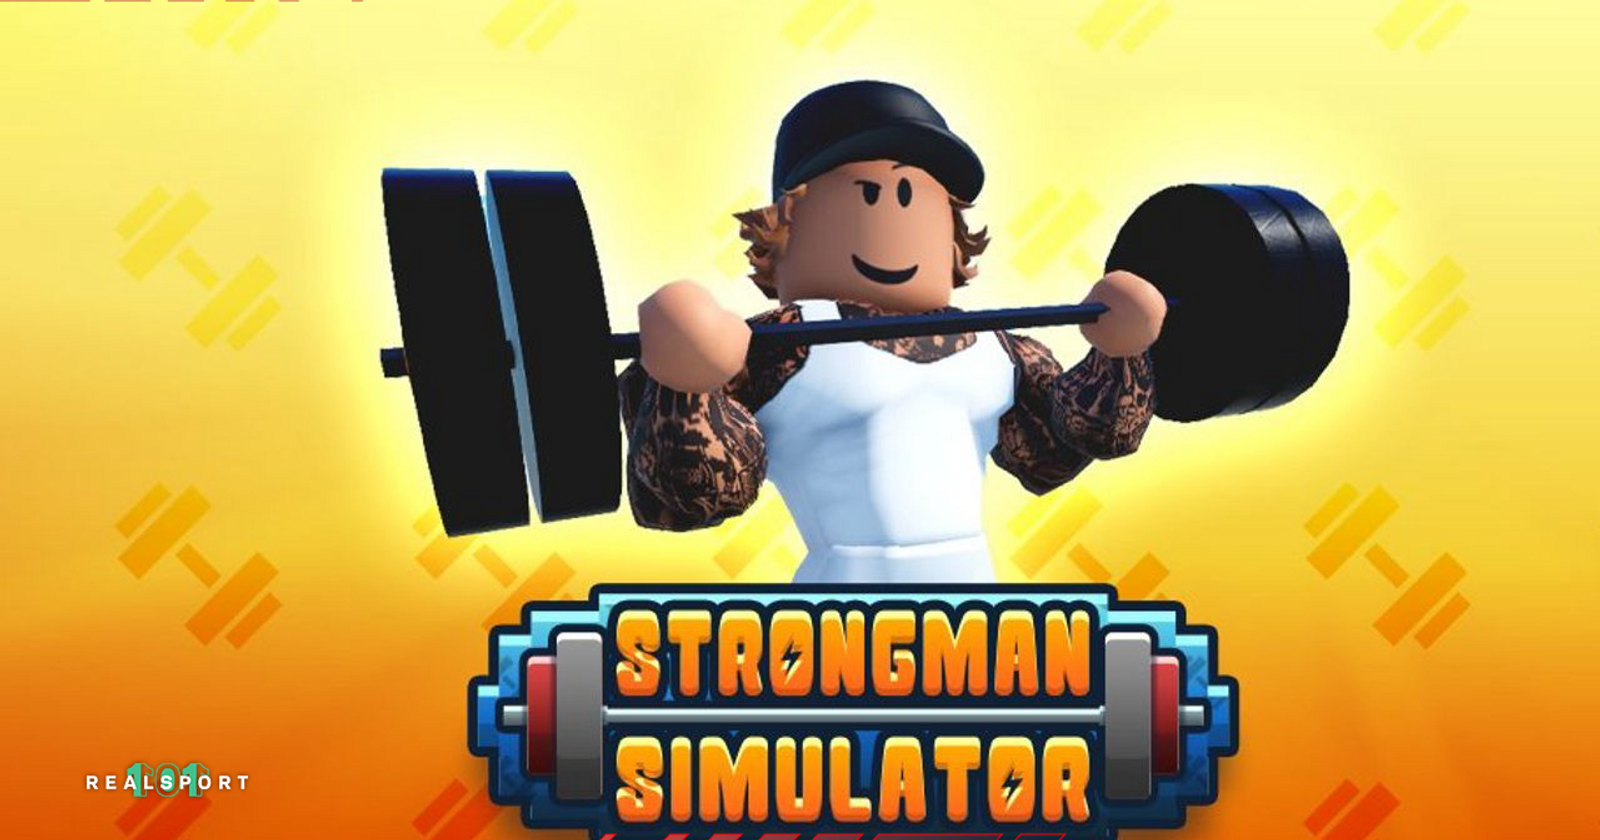 New Retro Update Working Codes 2021 in Roblox Strongman Simulator